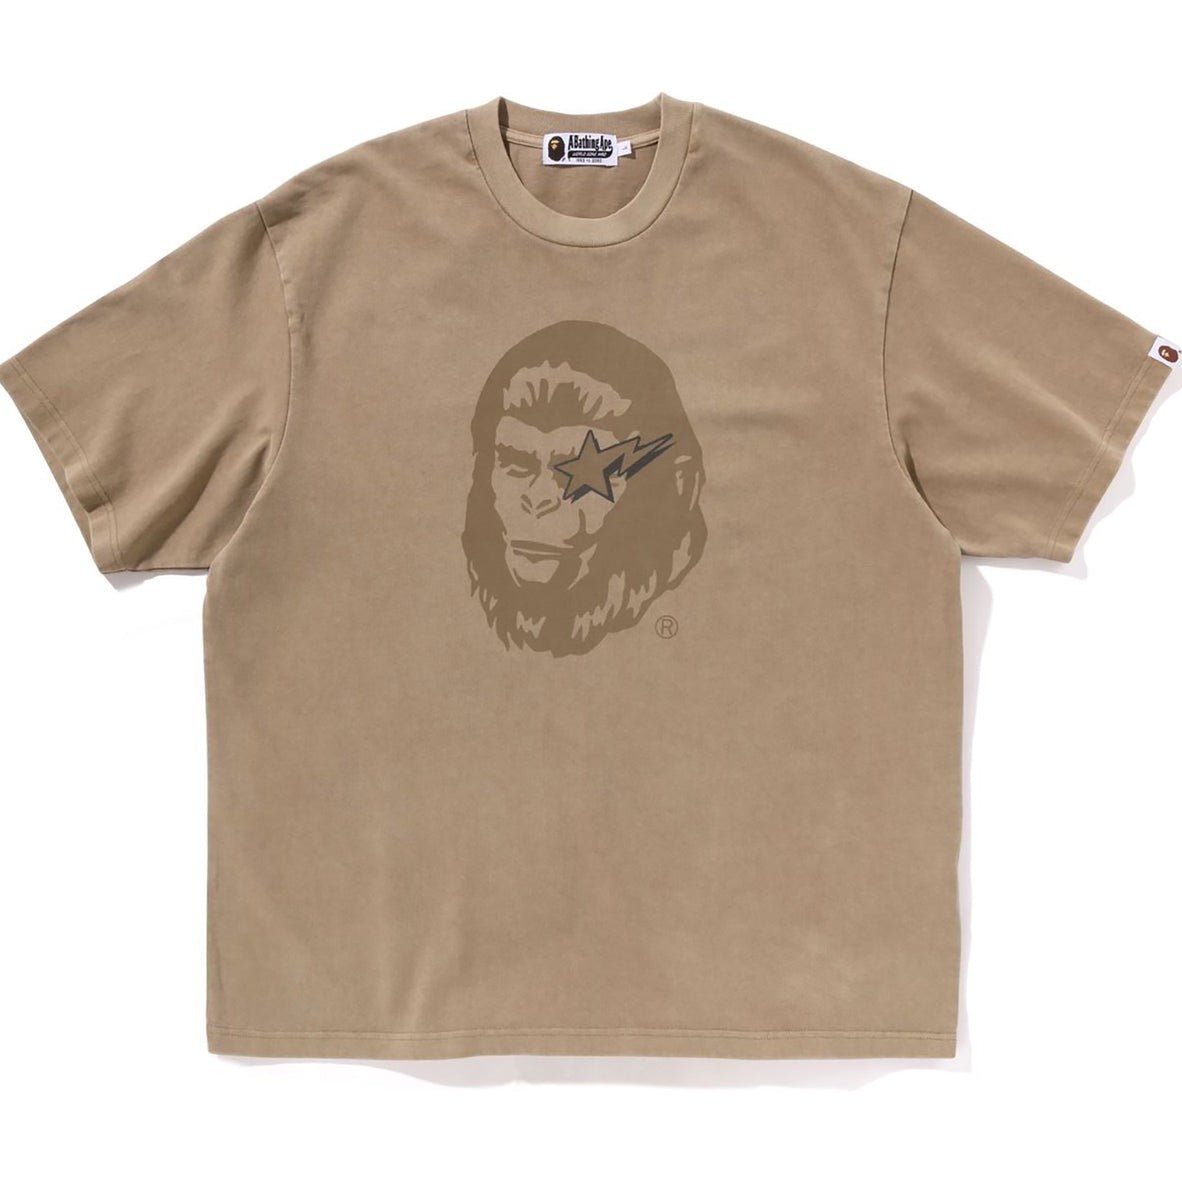 Bape WGM Garment Dyed T-Shirt - A Bathing Ape